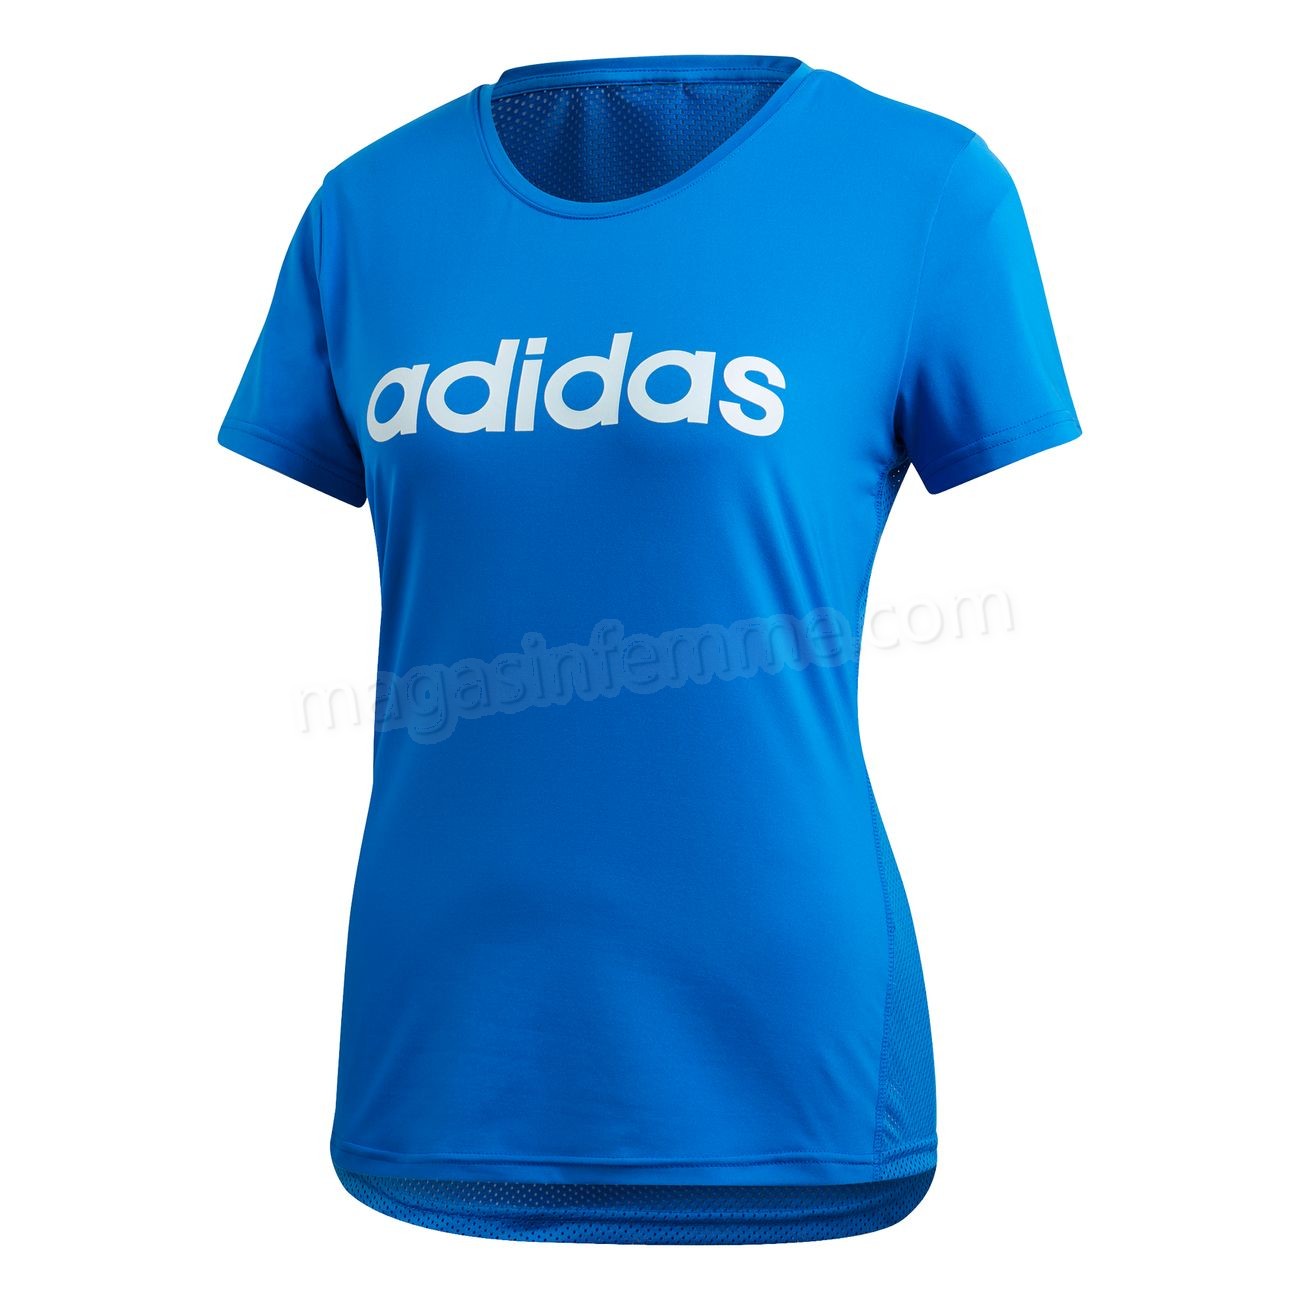 Adidas-Fitness femme ADIDAS T-shirt femme adidas Design 2 Move Logo en solde - Adidas-Fitness femme ADIDAS T-shirt femme adidas Design 2 Move Logo en solde